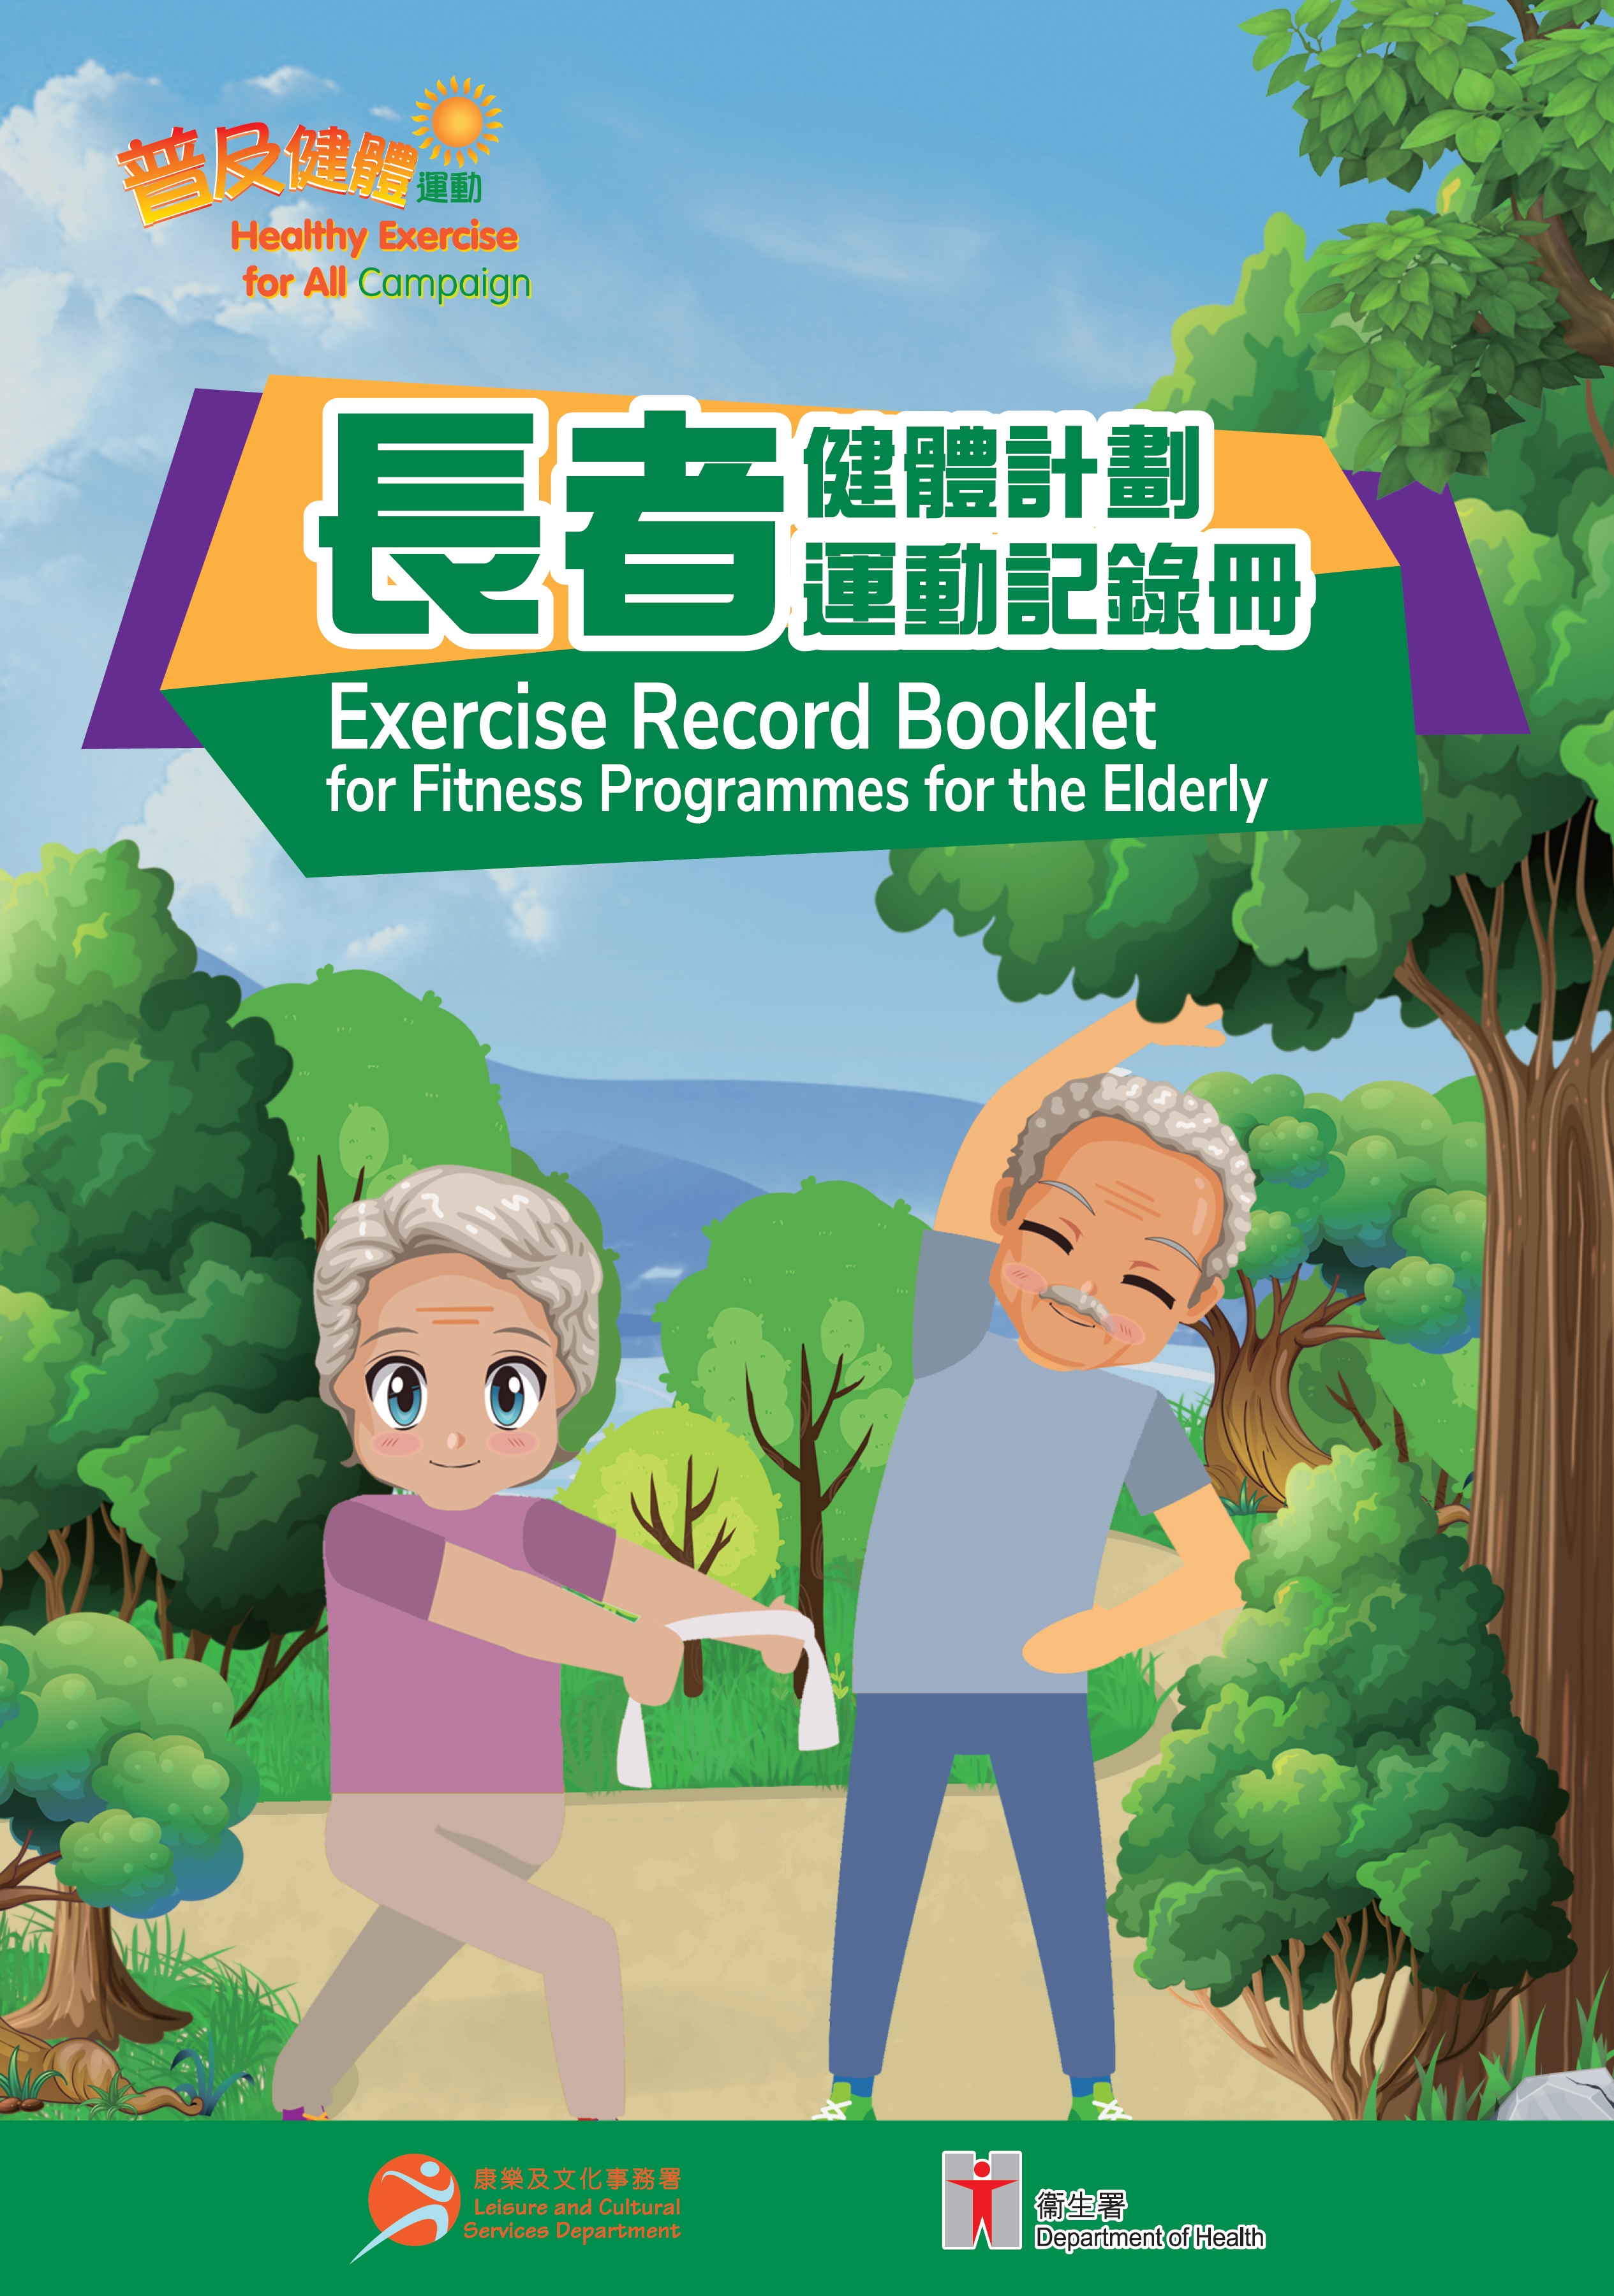 Exercise Record Booklet for Fitness Programmes for the Elderly